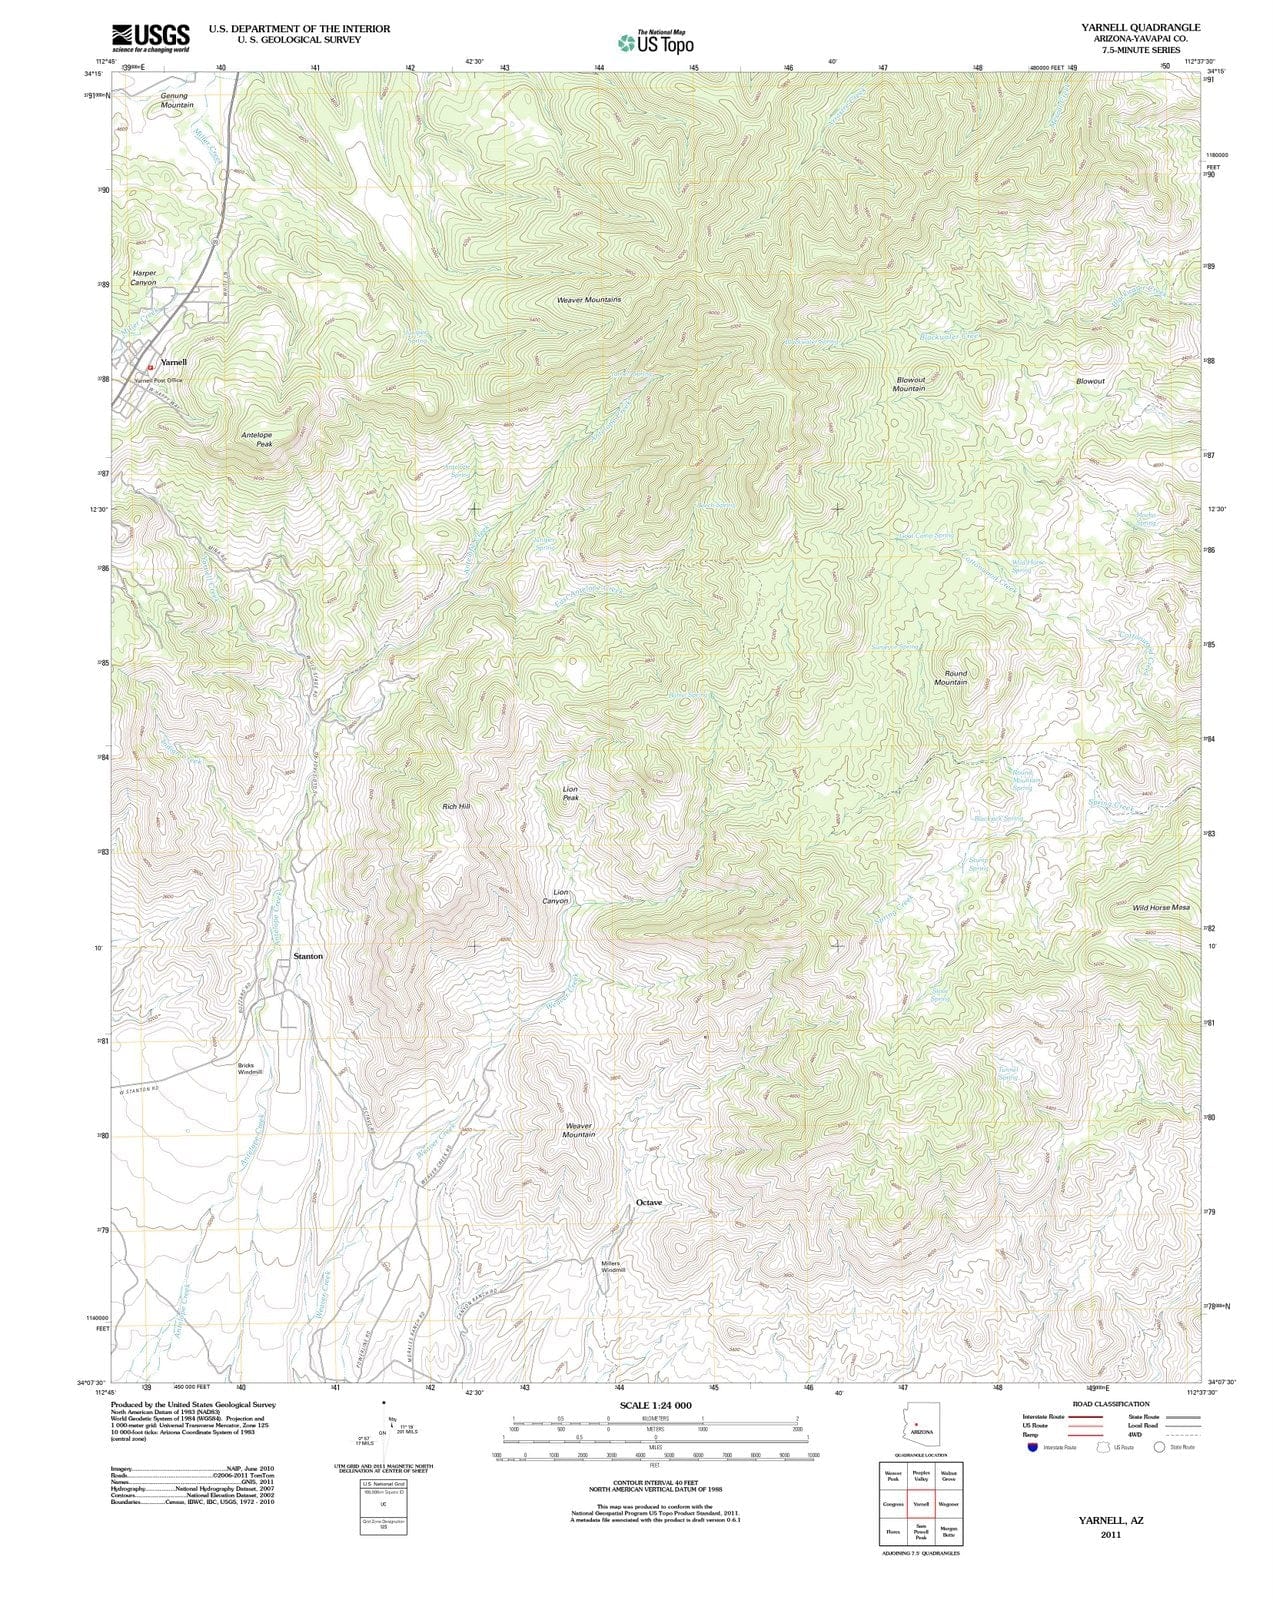 2011 Yarnell, AZ - Arizona - USGS Topographic Map